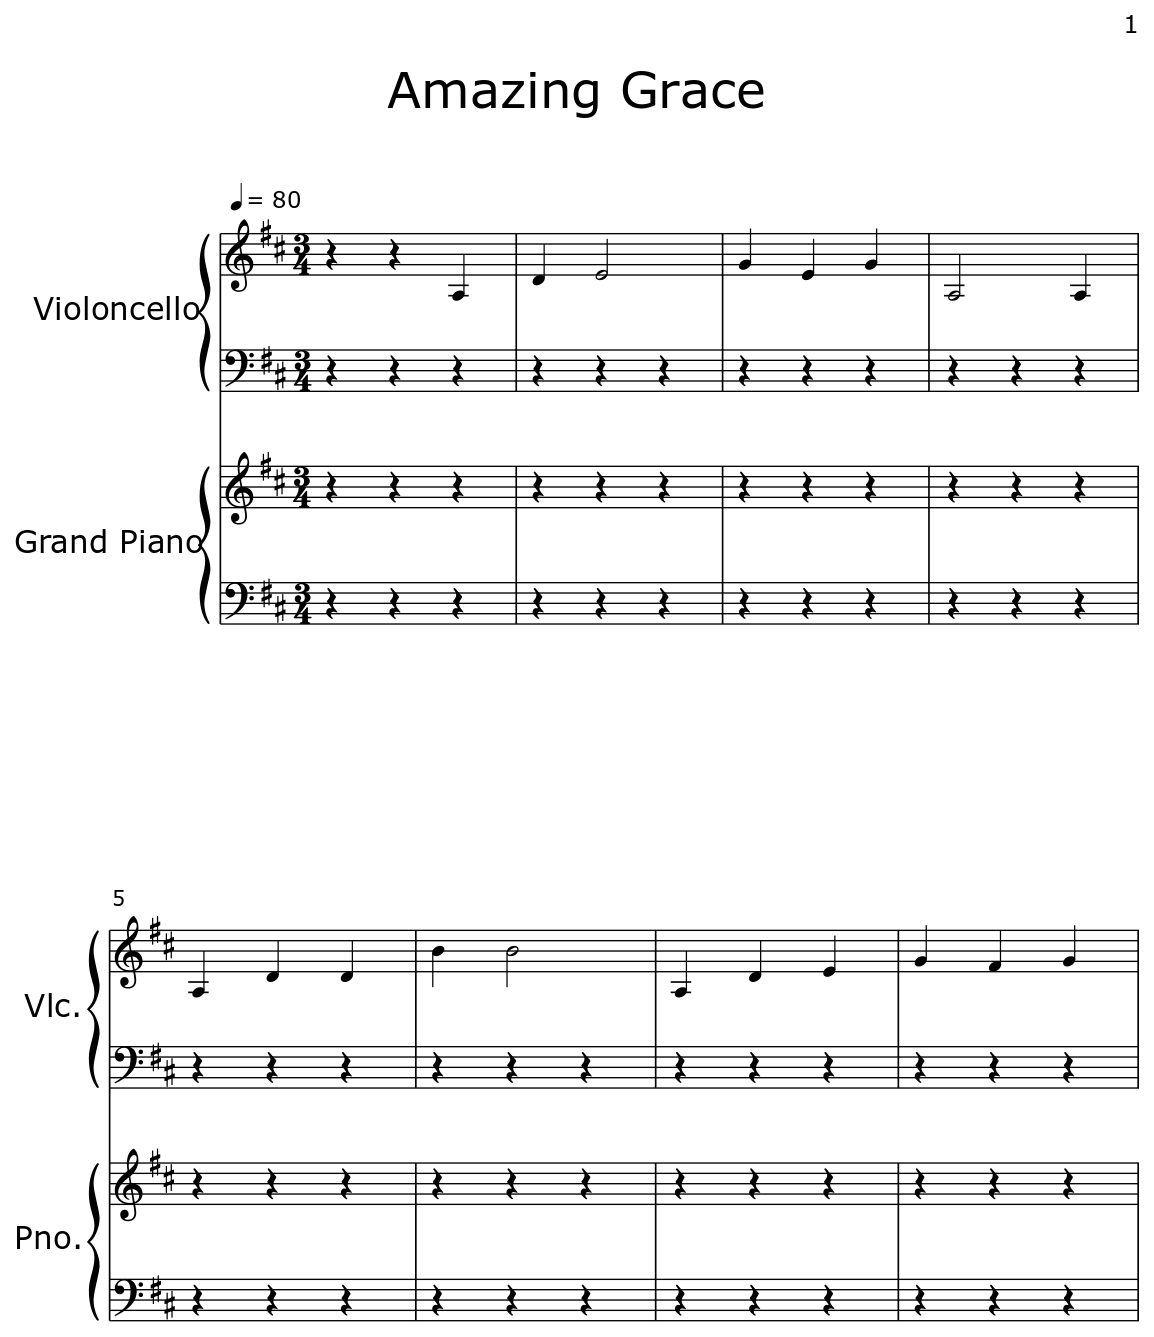 Amazing Grace - Sheet music for Cello, Piano